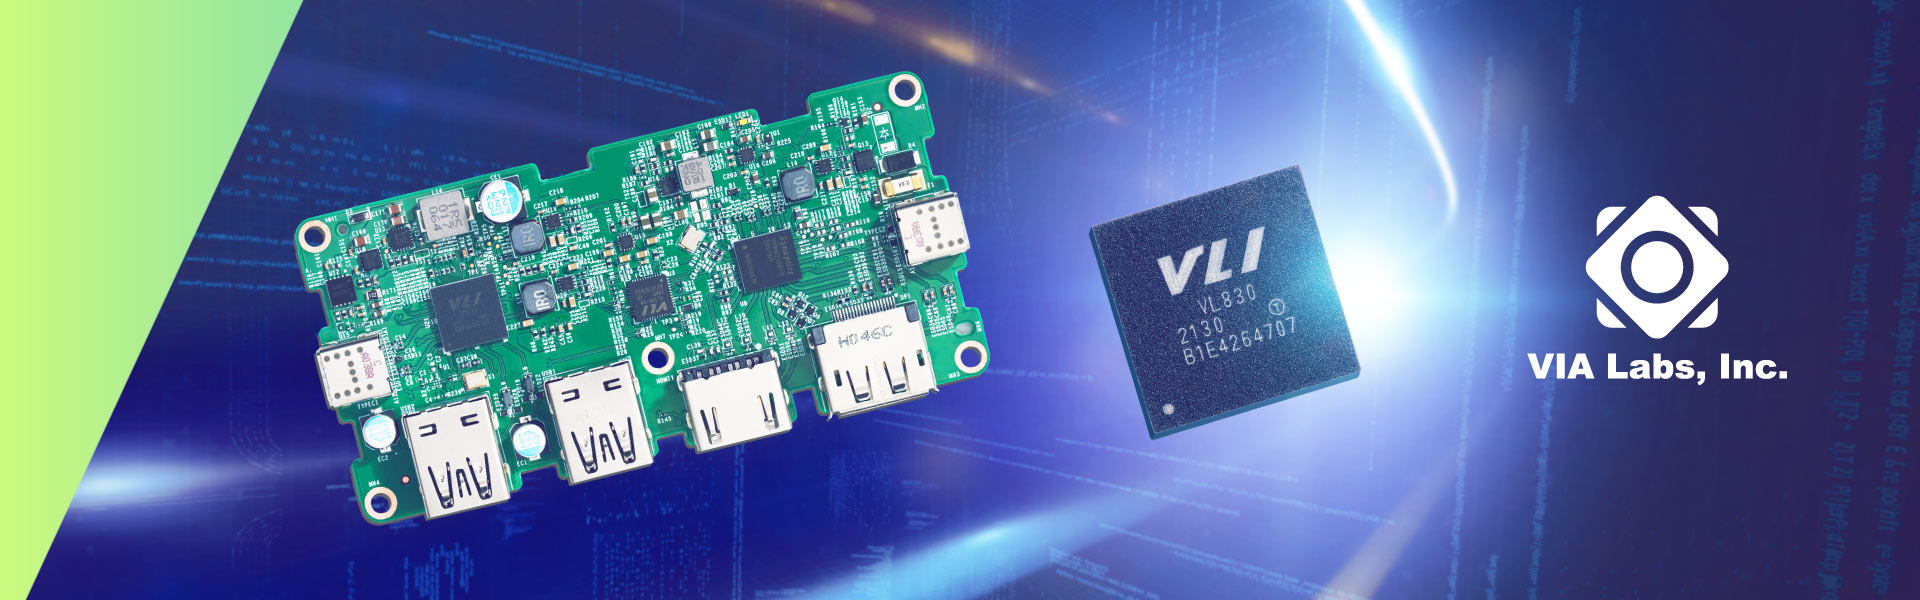 VLI-830 USB4 Endpoint Device Board